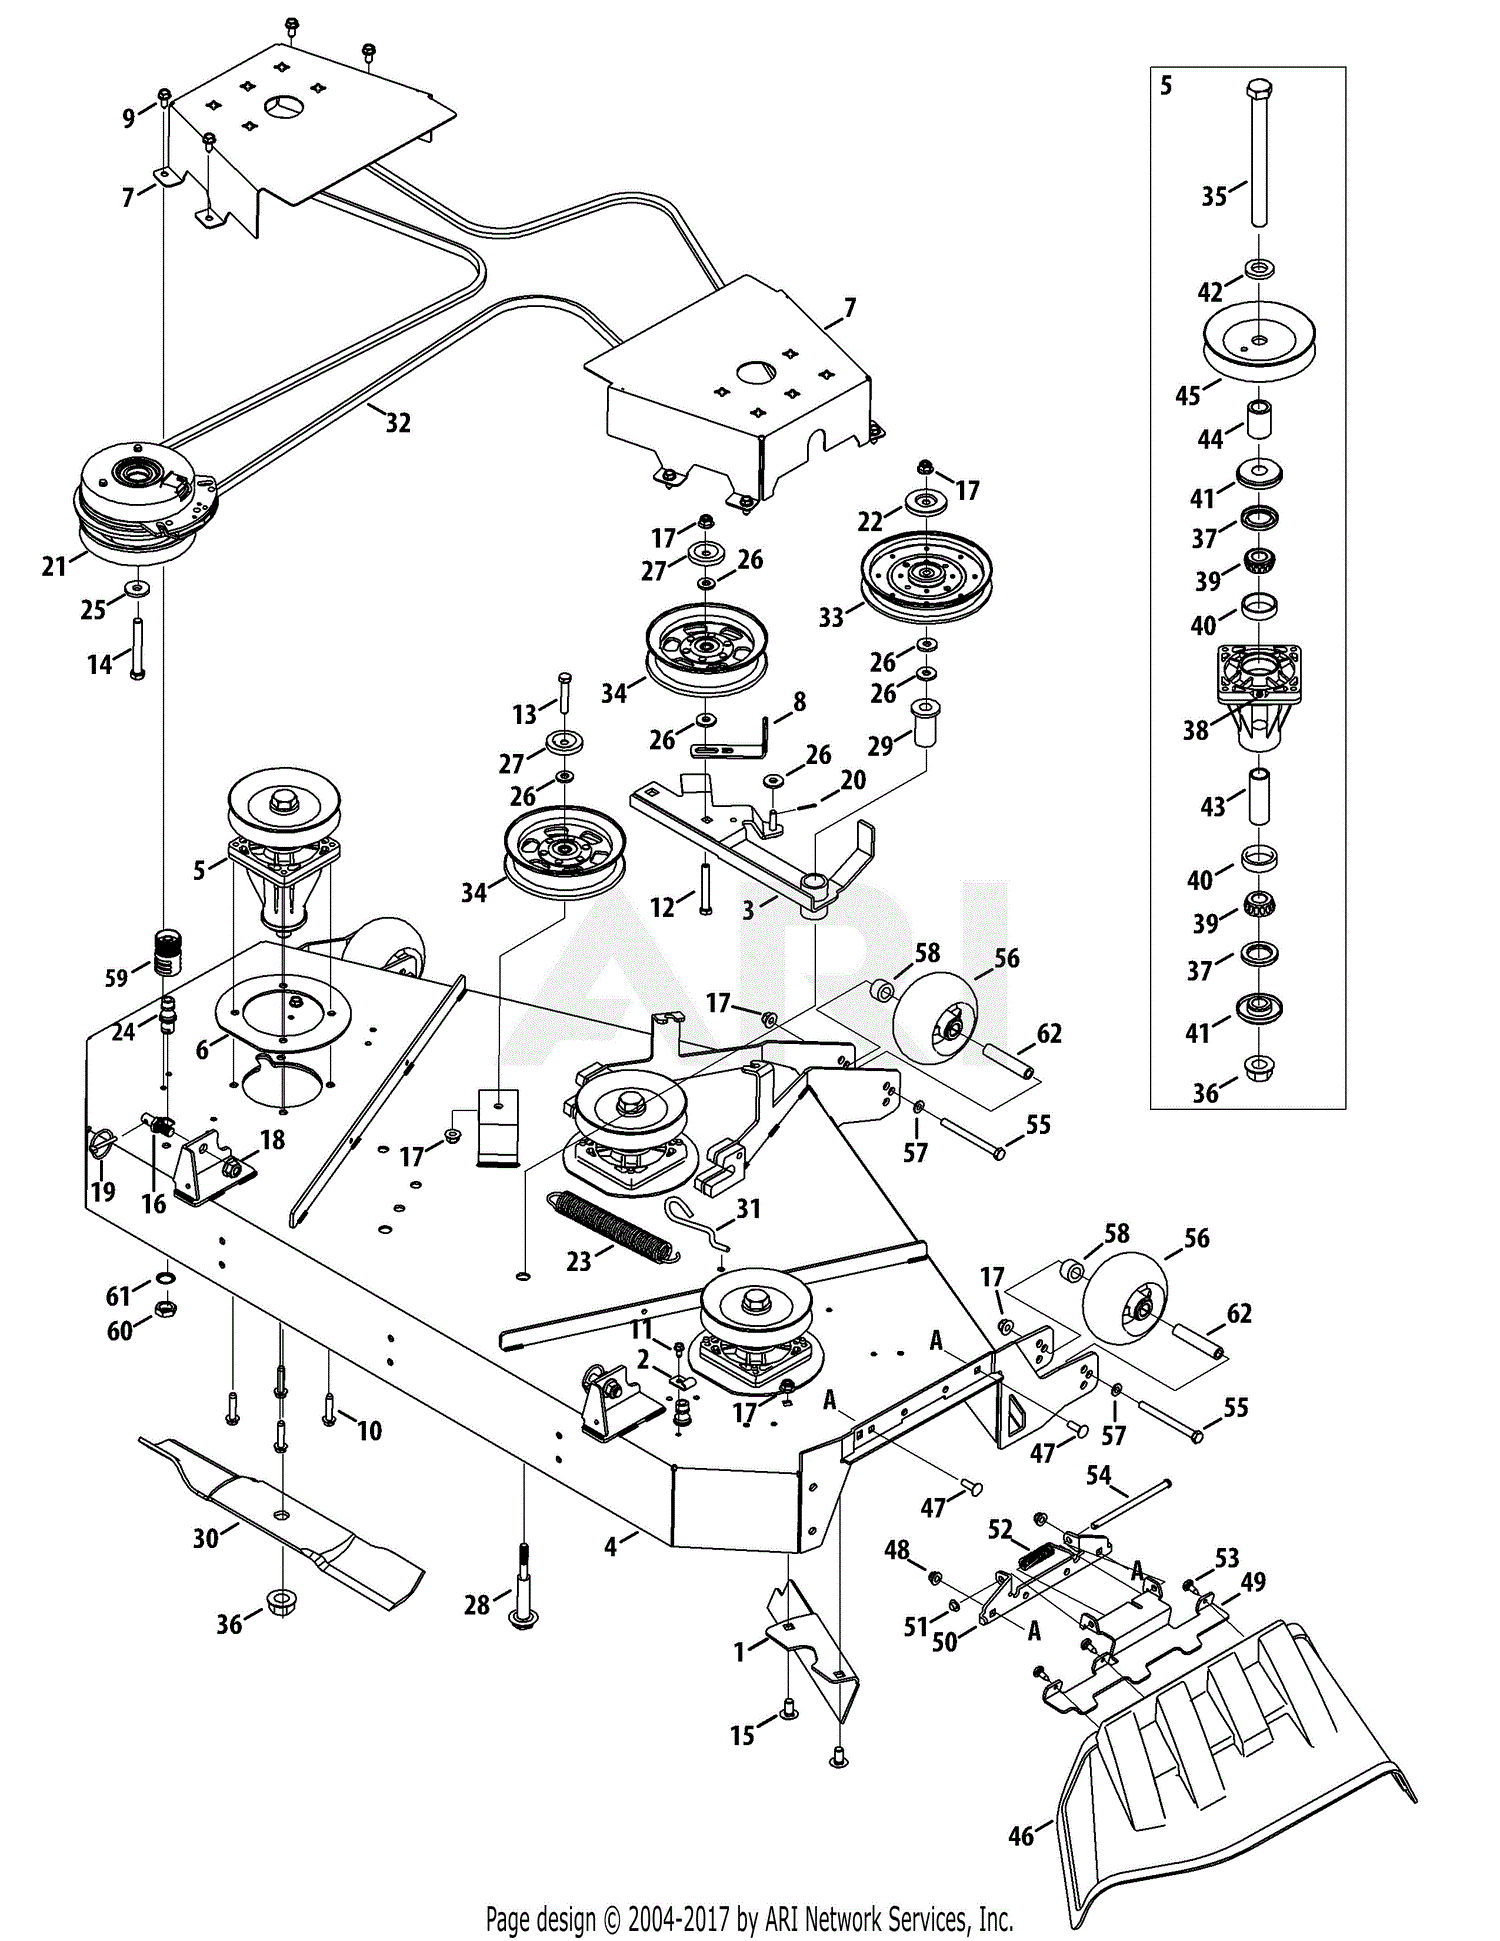 38 craftsman 46 mower deck parts diagram - Diagram Resource